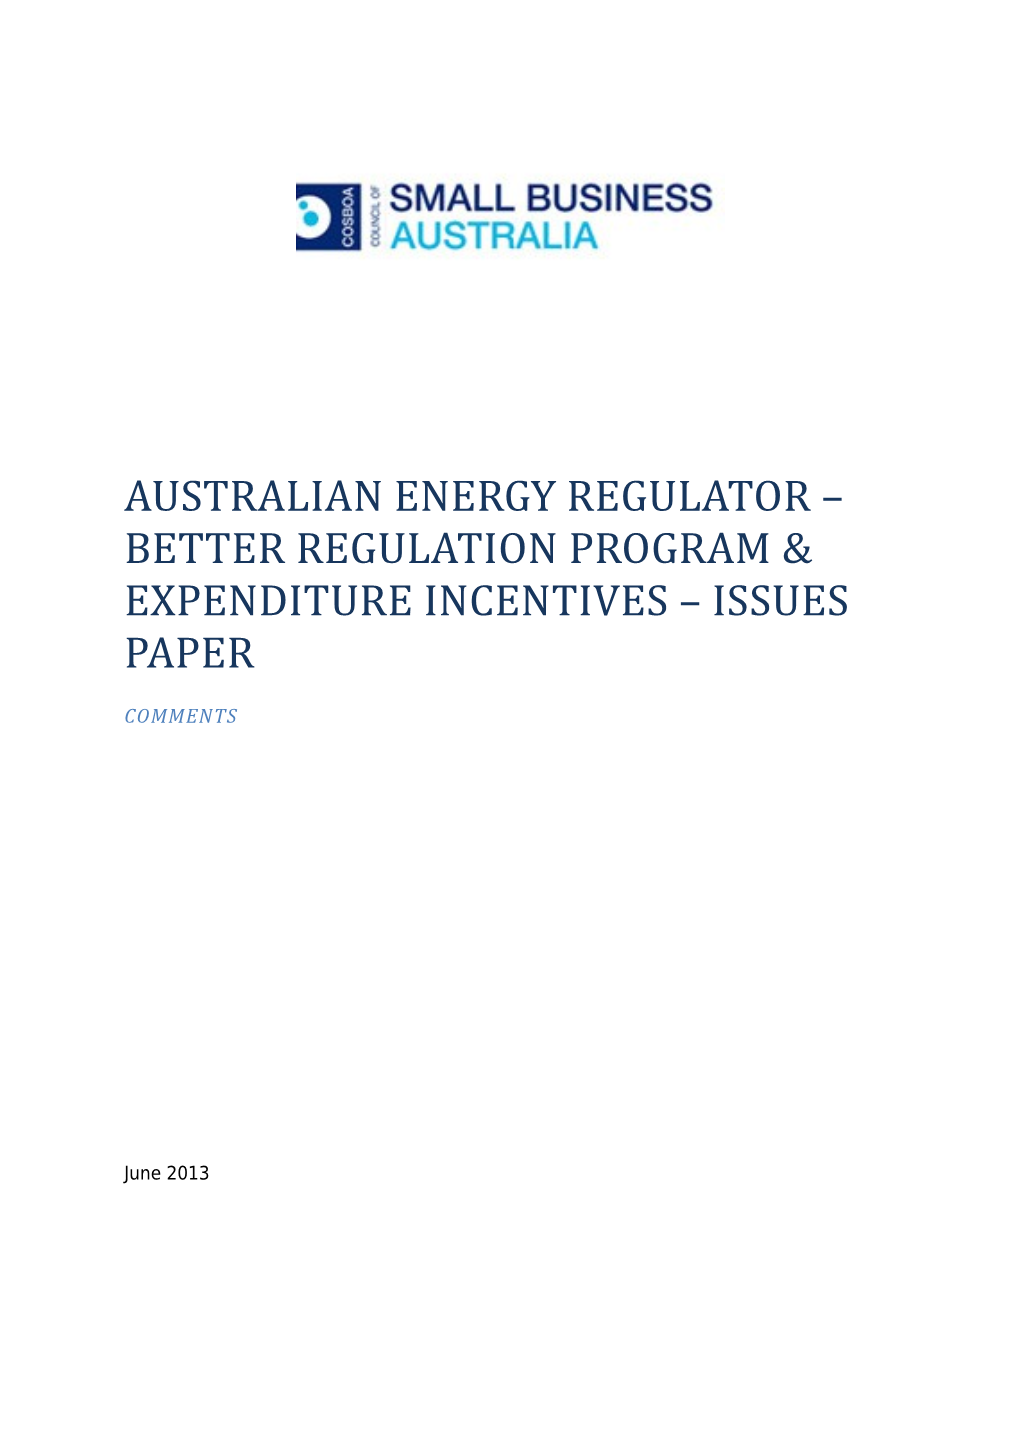 Australian Energy Regulator Better Regulation Program & Expenditure Incentives Issues Paper